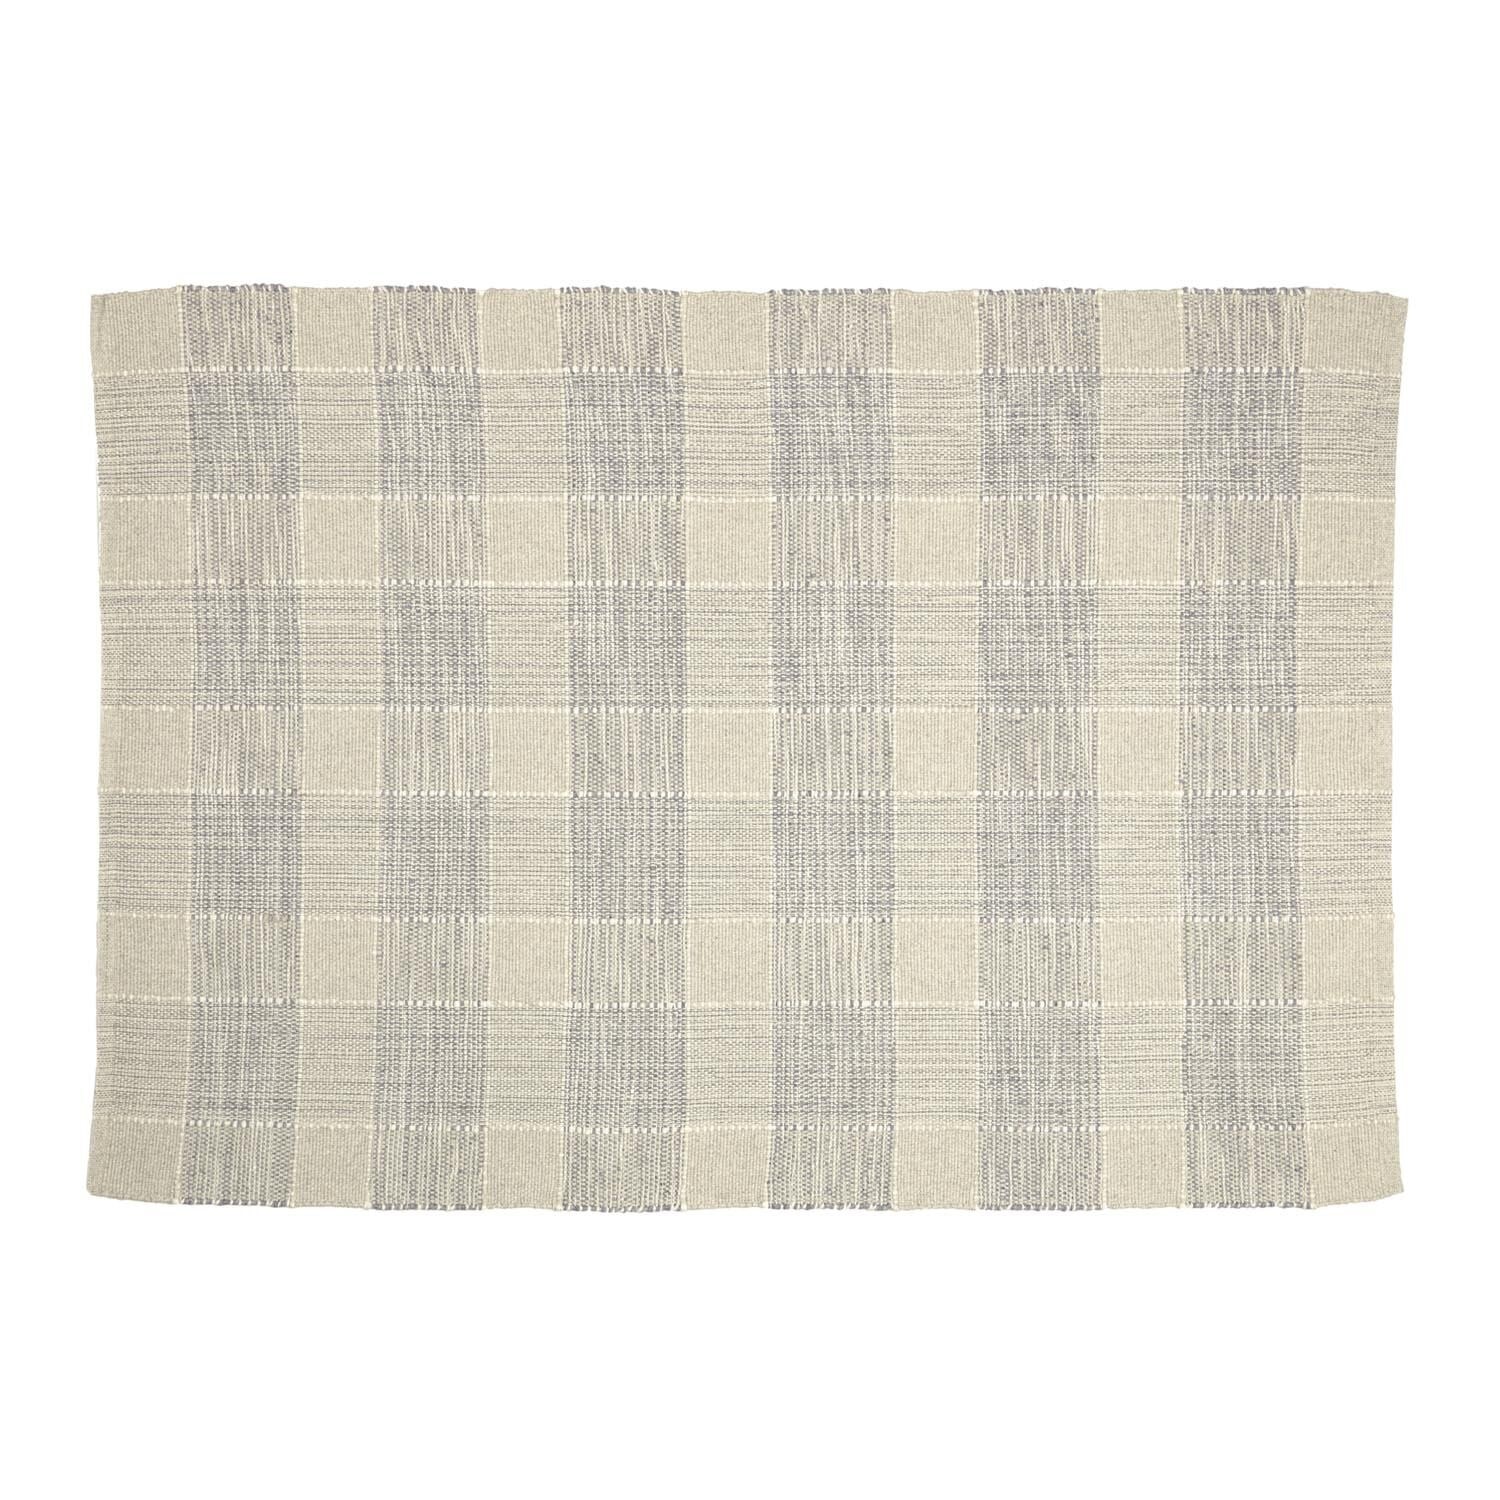 LAFORMA Donata gulvtæppe - beige/grå bomuld/uld/nylon/polyester (160x230)